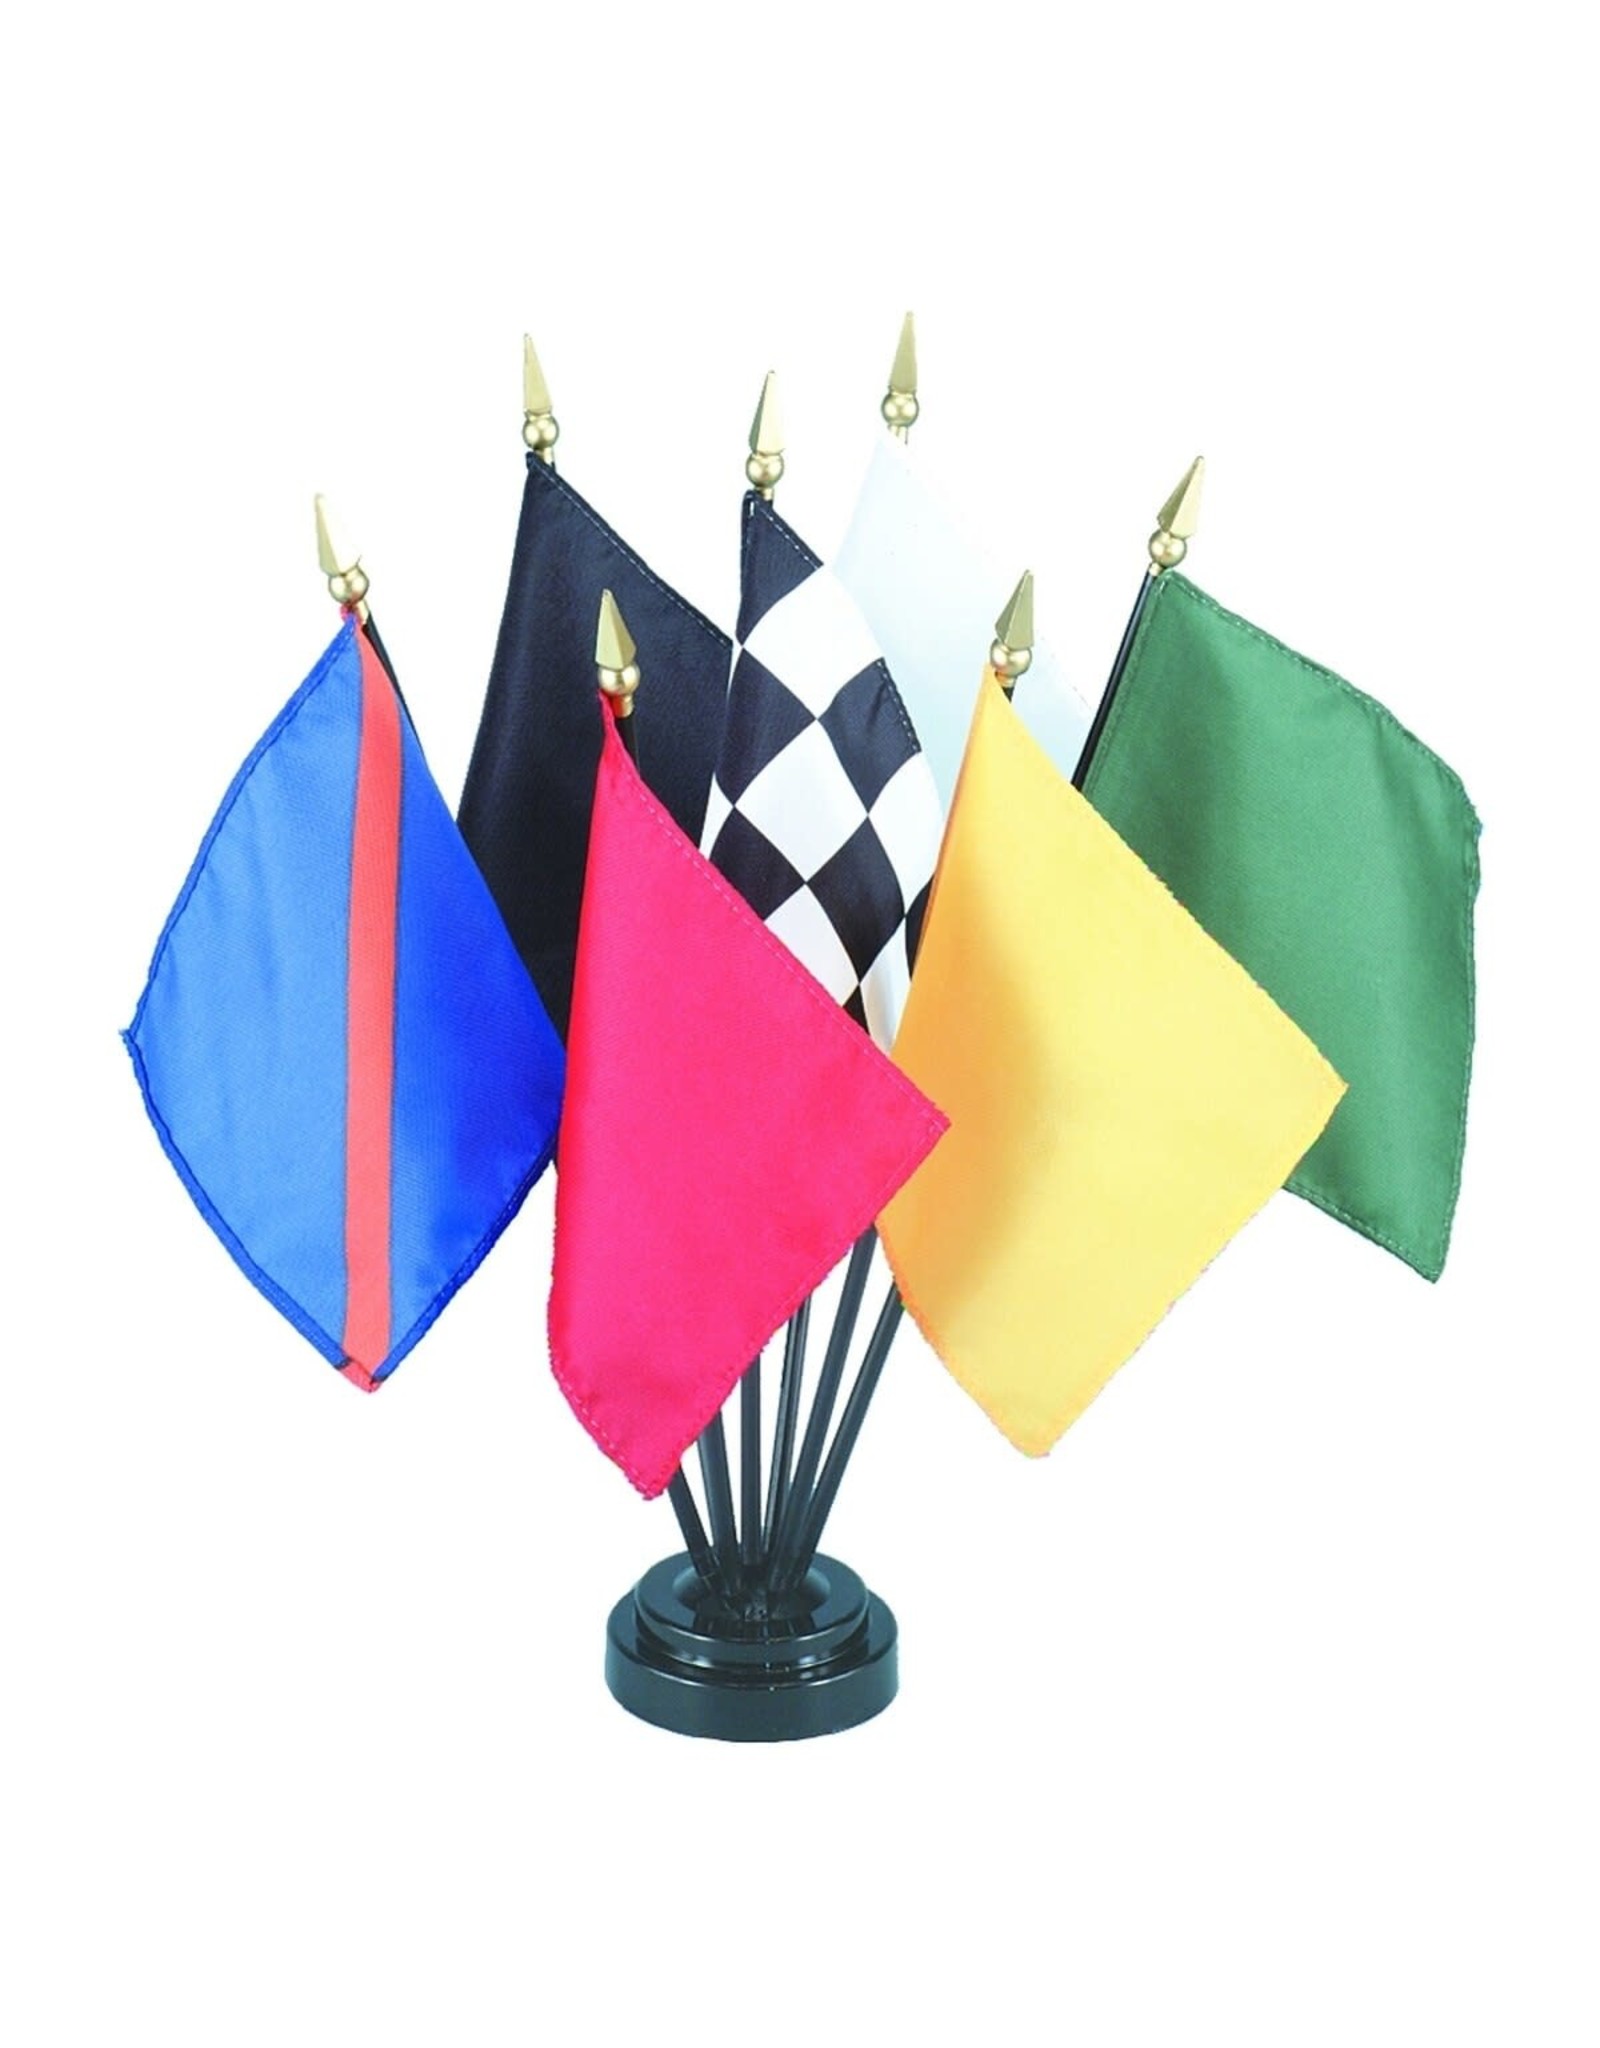 Annin Minature Racing Flag Set